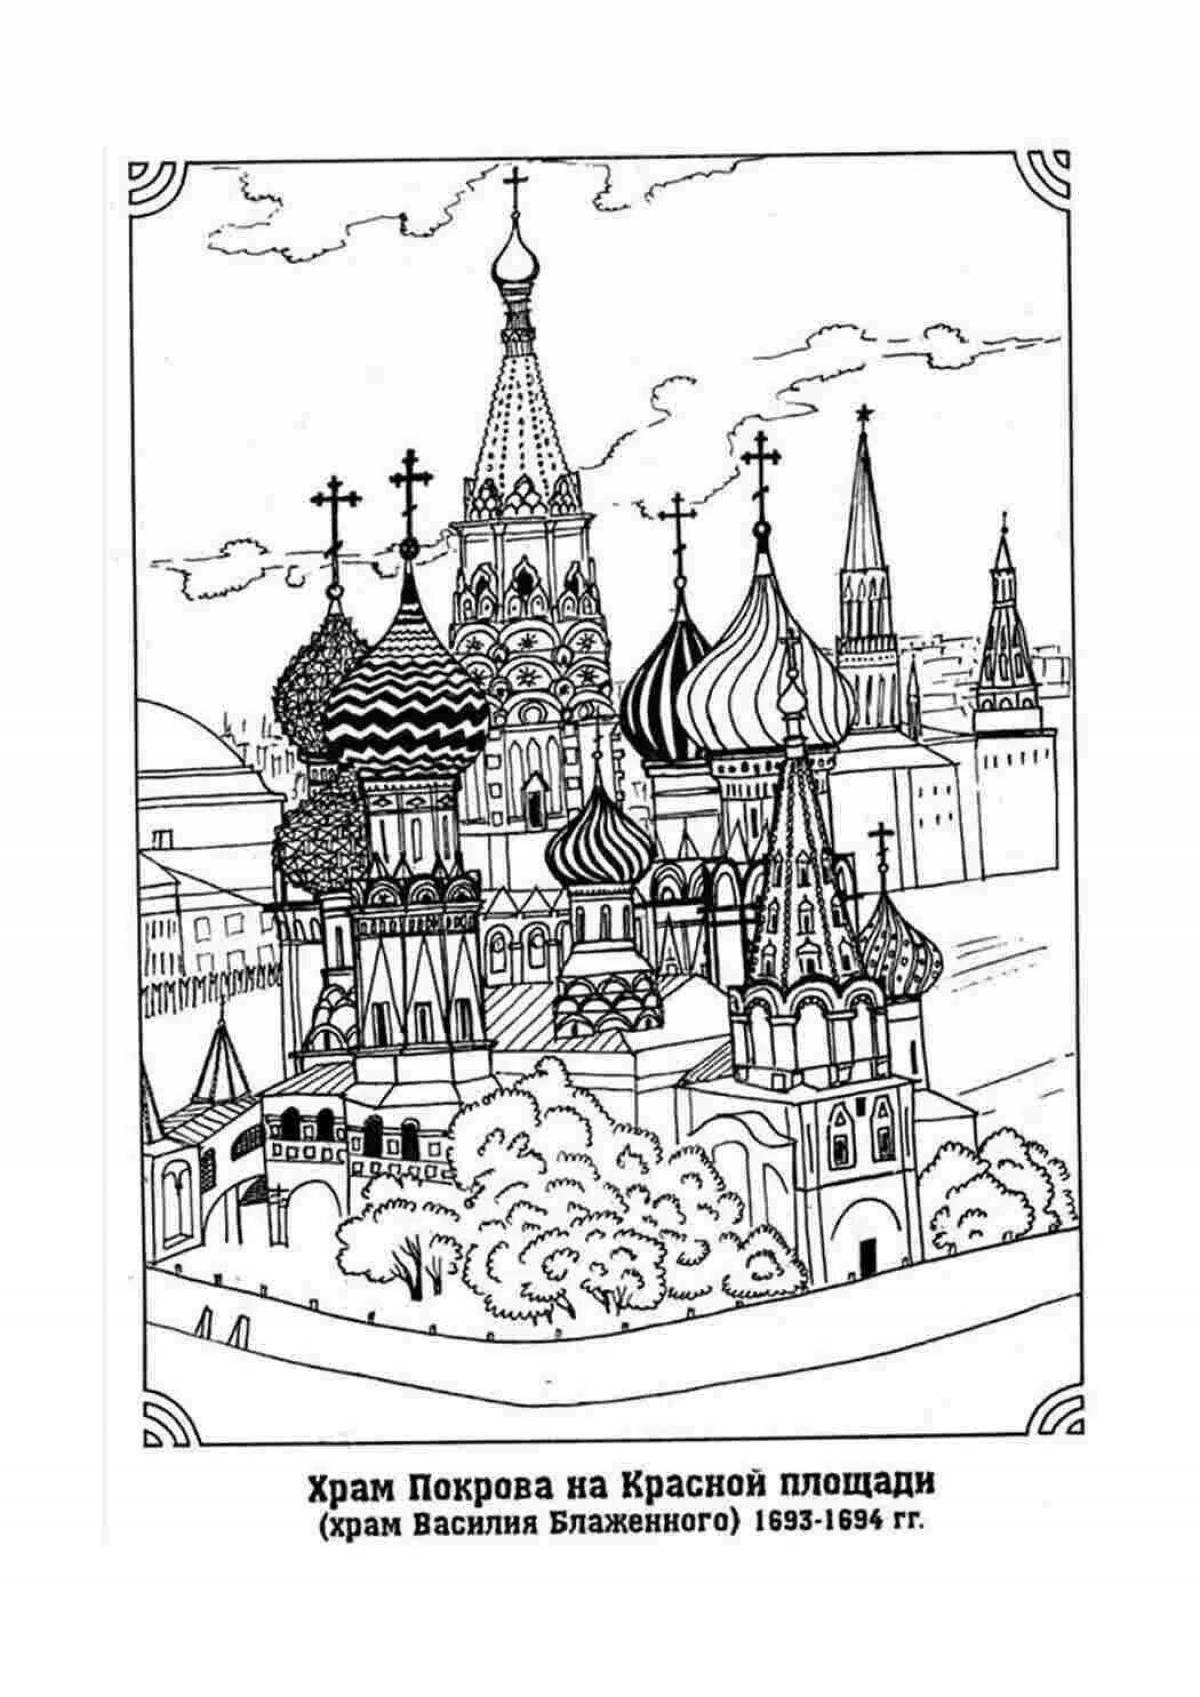 Joyful kremlin coloring book for kids